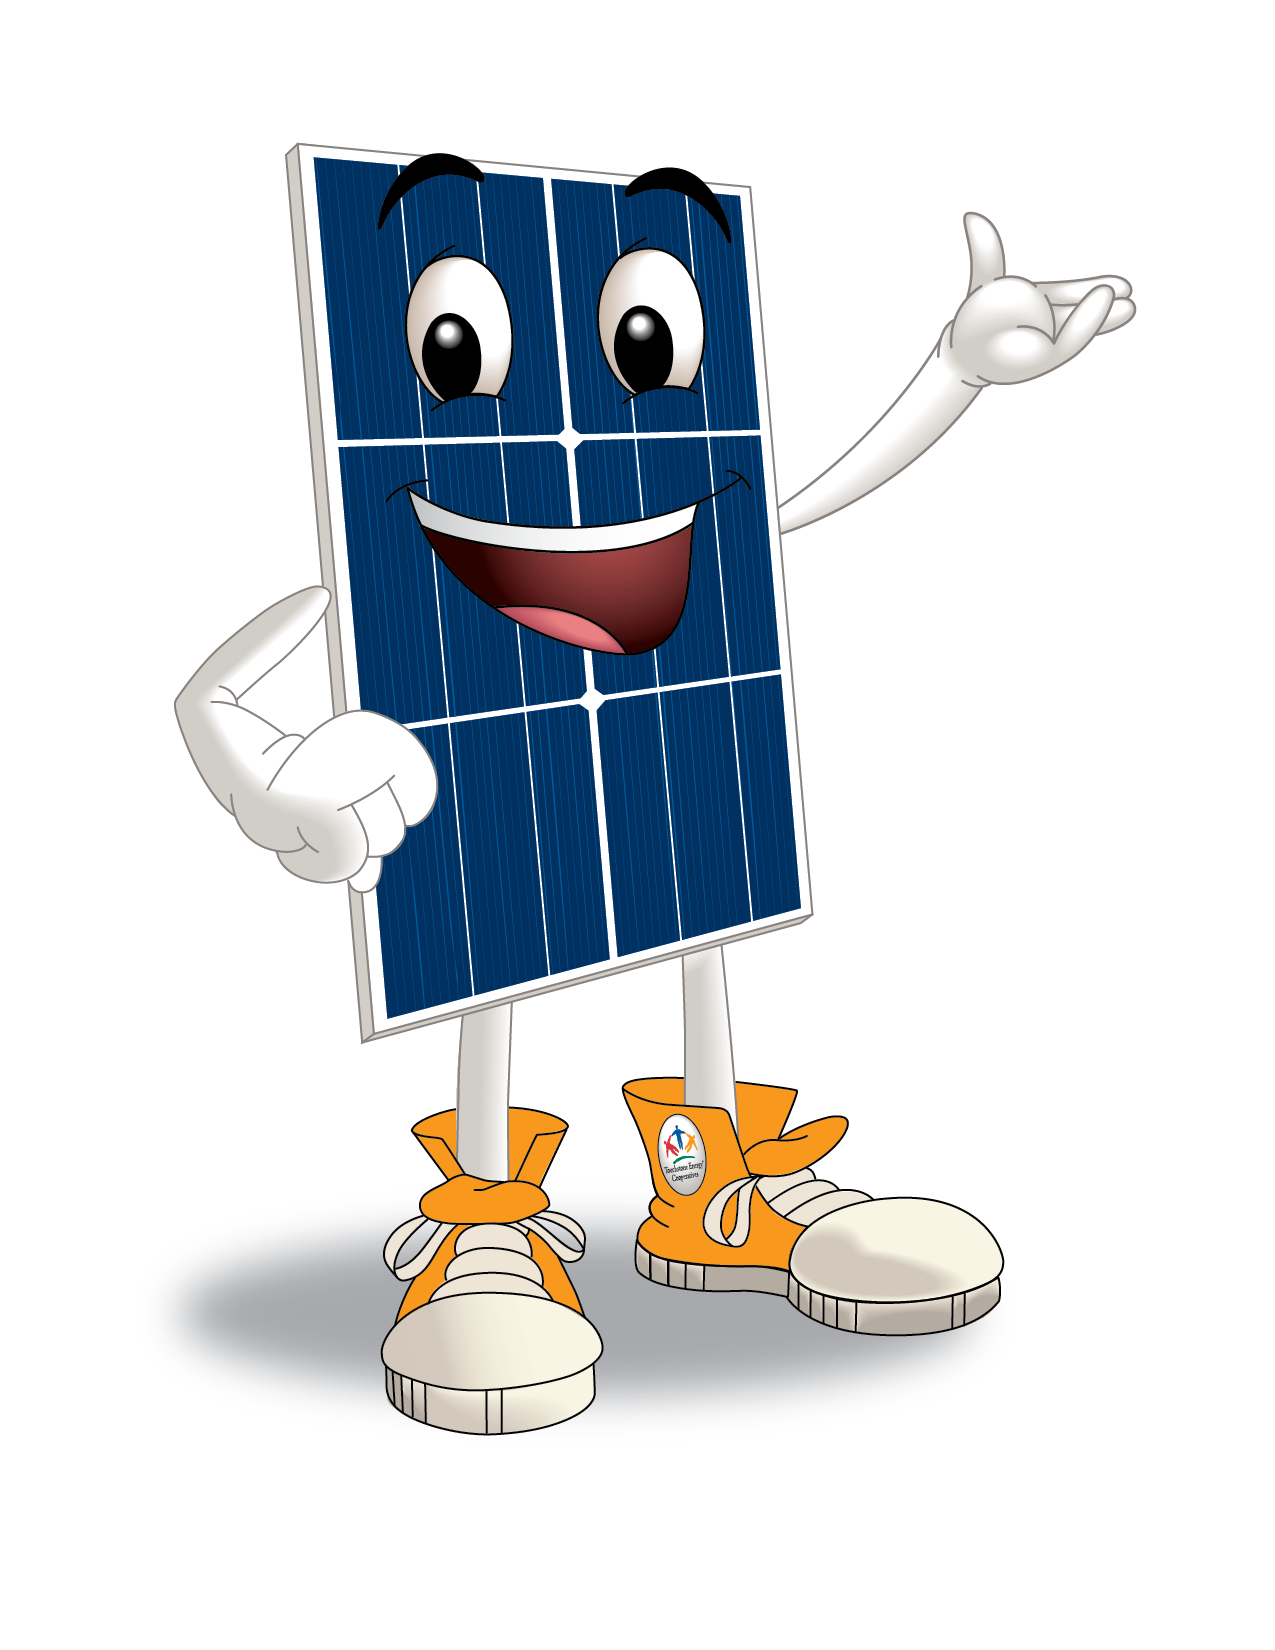 Image of Solar Sam! Touchstone Energy's solar mascot.